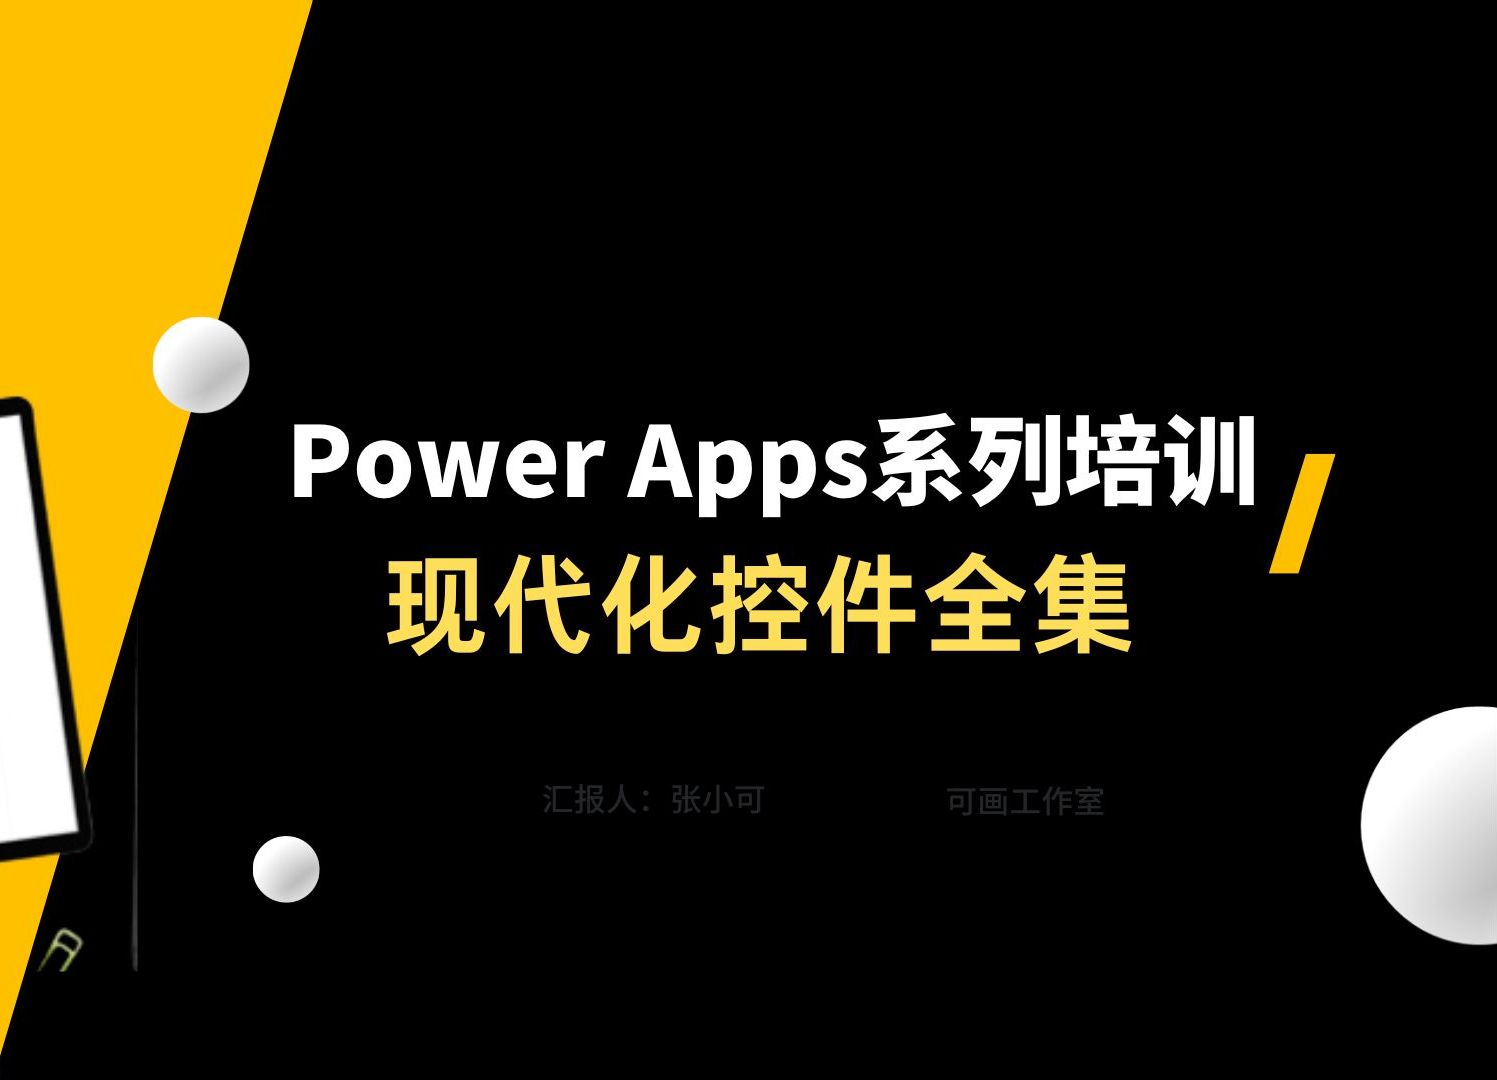 【Power Apps系列培训课程】现代化控件全集-下部